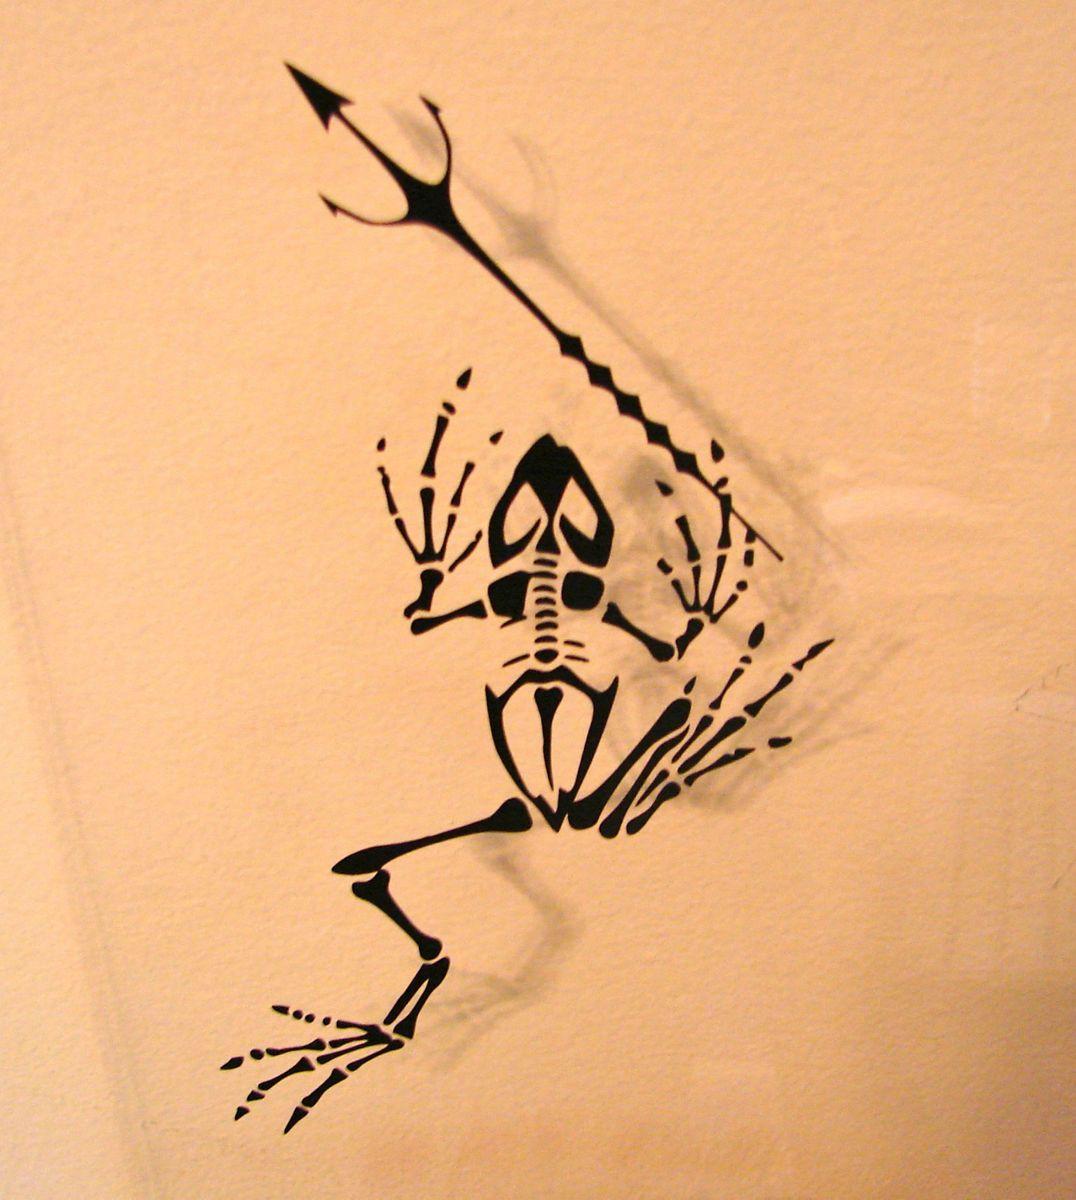 Navy Trident Logo - Navy Seal Decal Team 6 DEVGRU Frog Skeleton trident Real Symbol